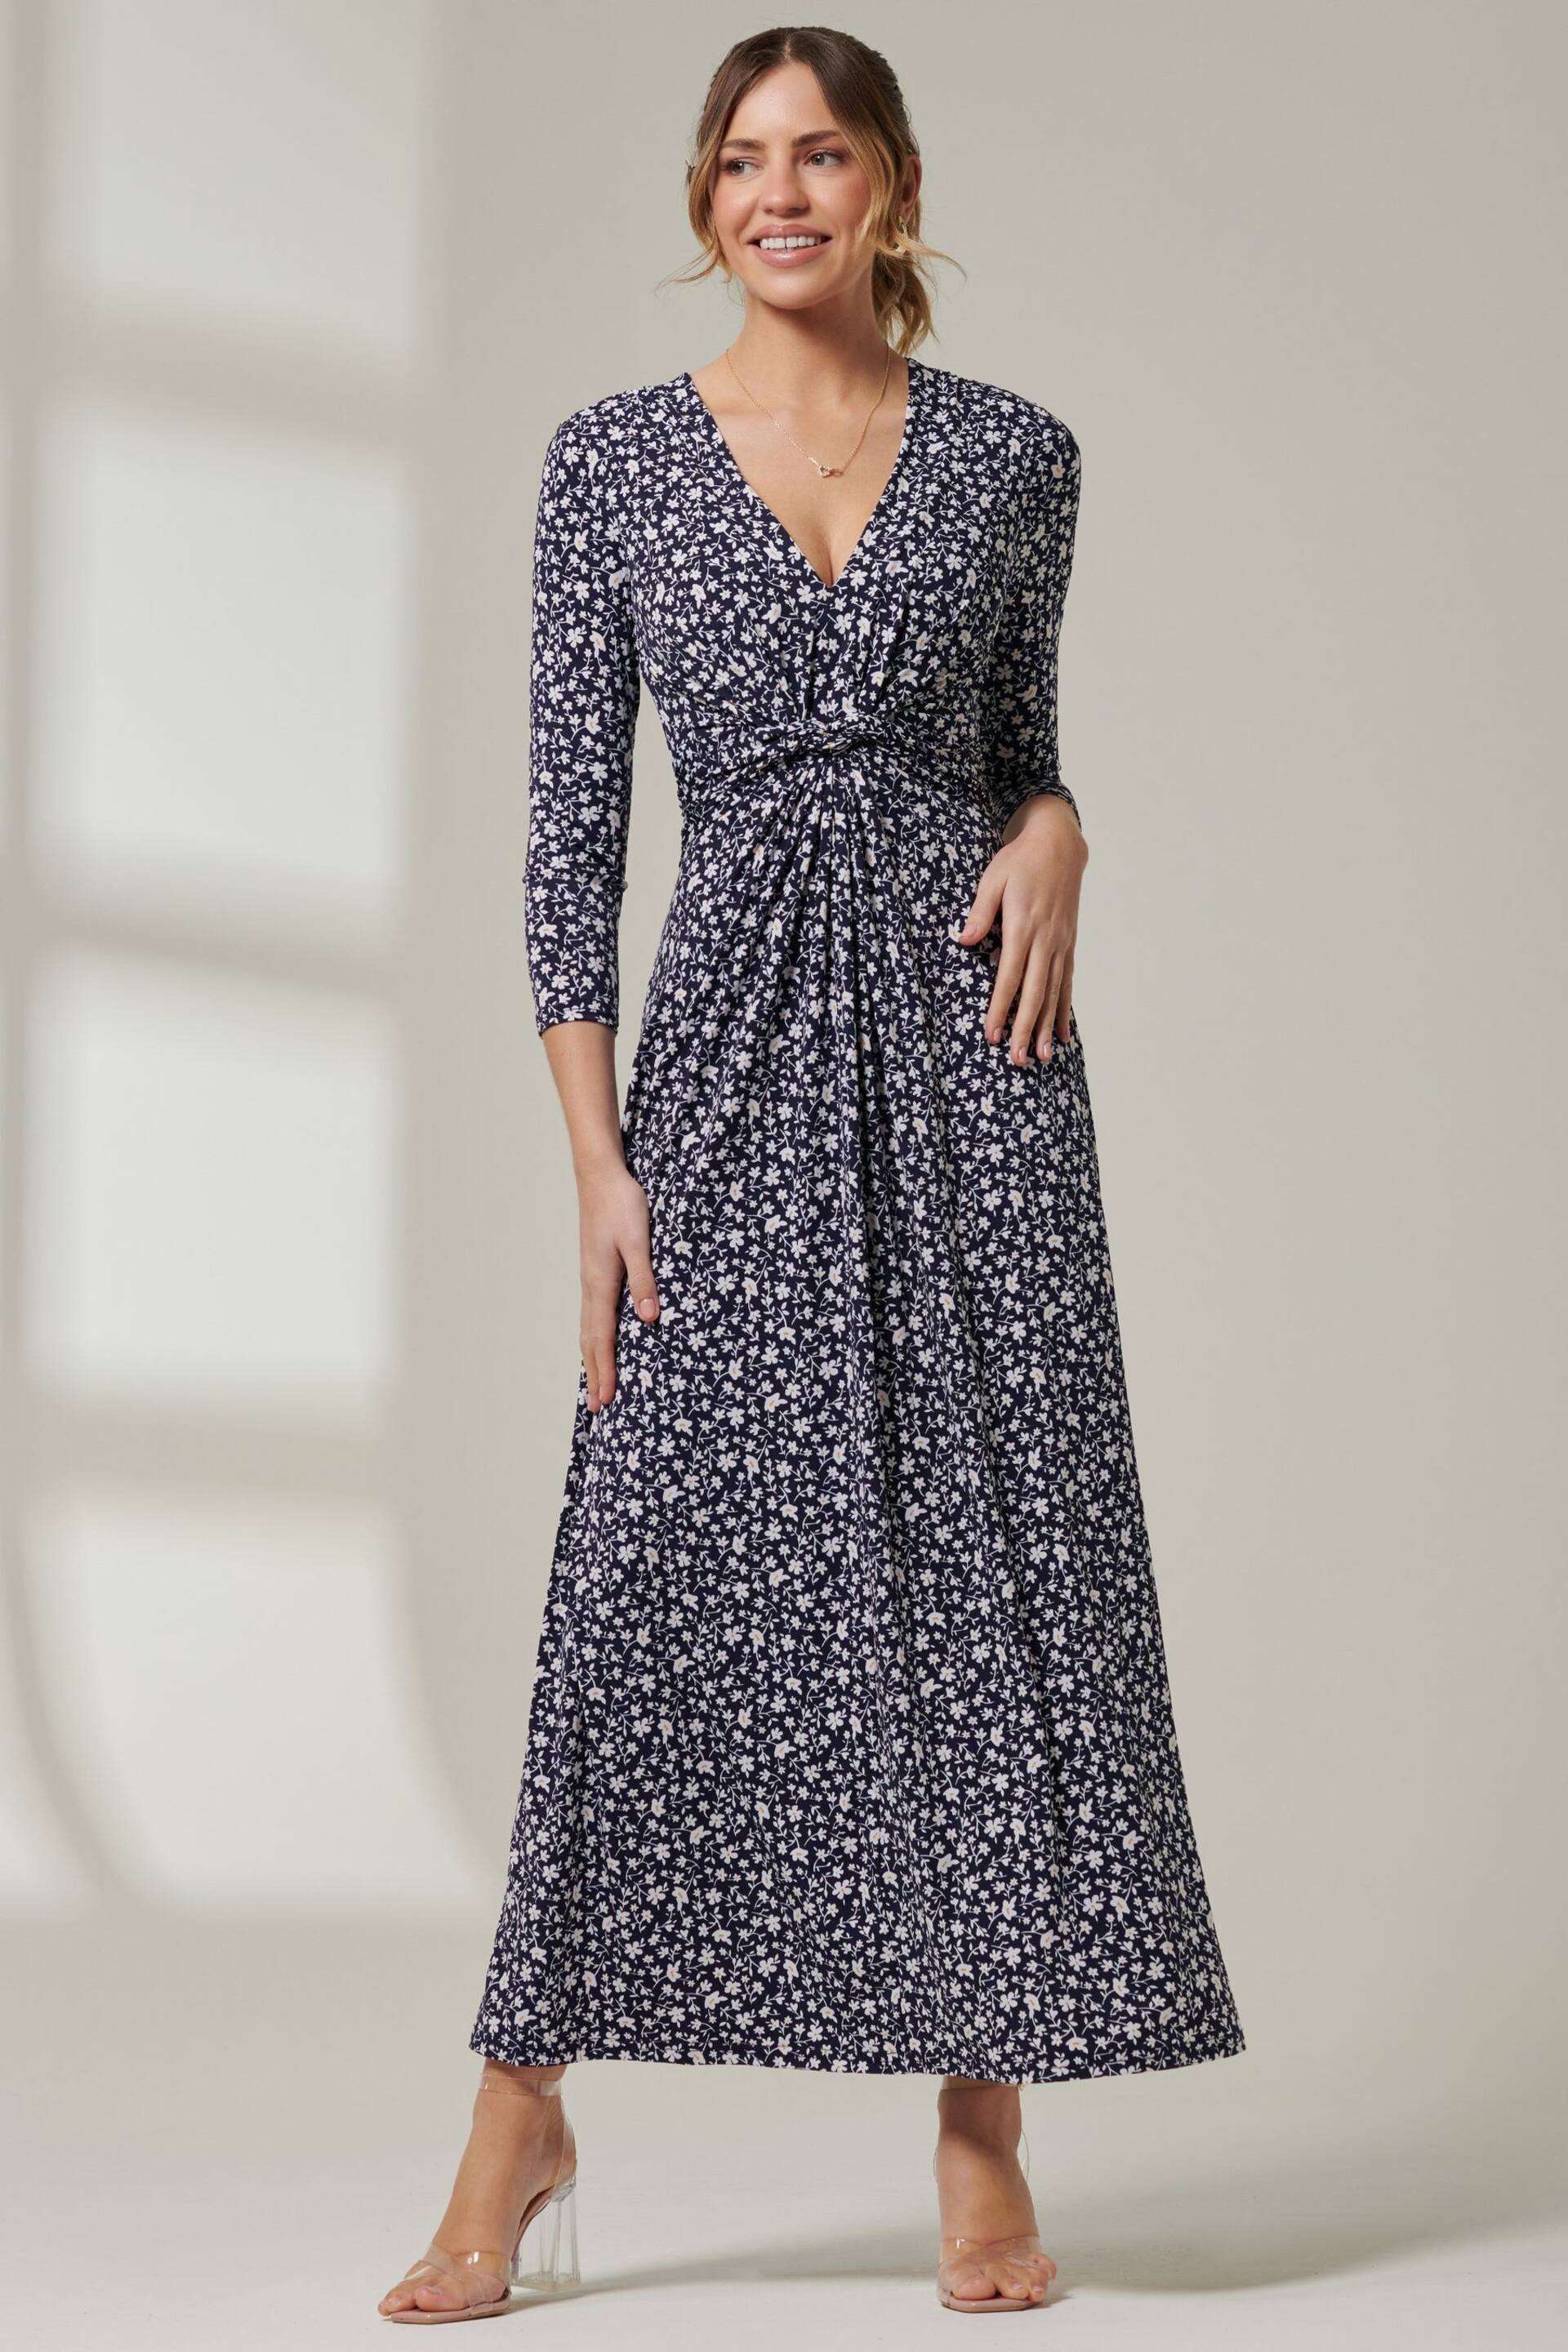 Jolie Moi Blue V-Neck 3/4 Sleeve Jersey Maxi Dress - Image 1 of 6